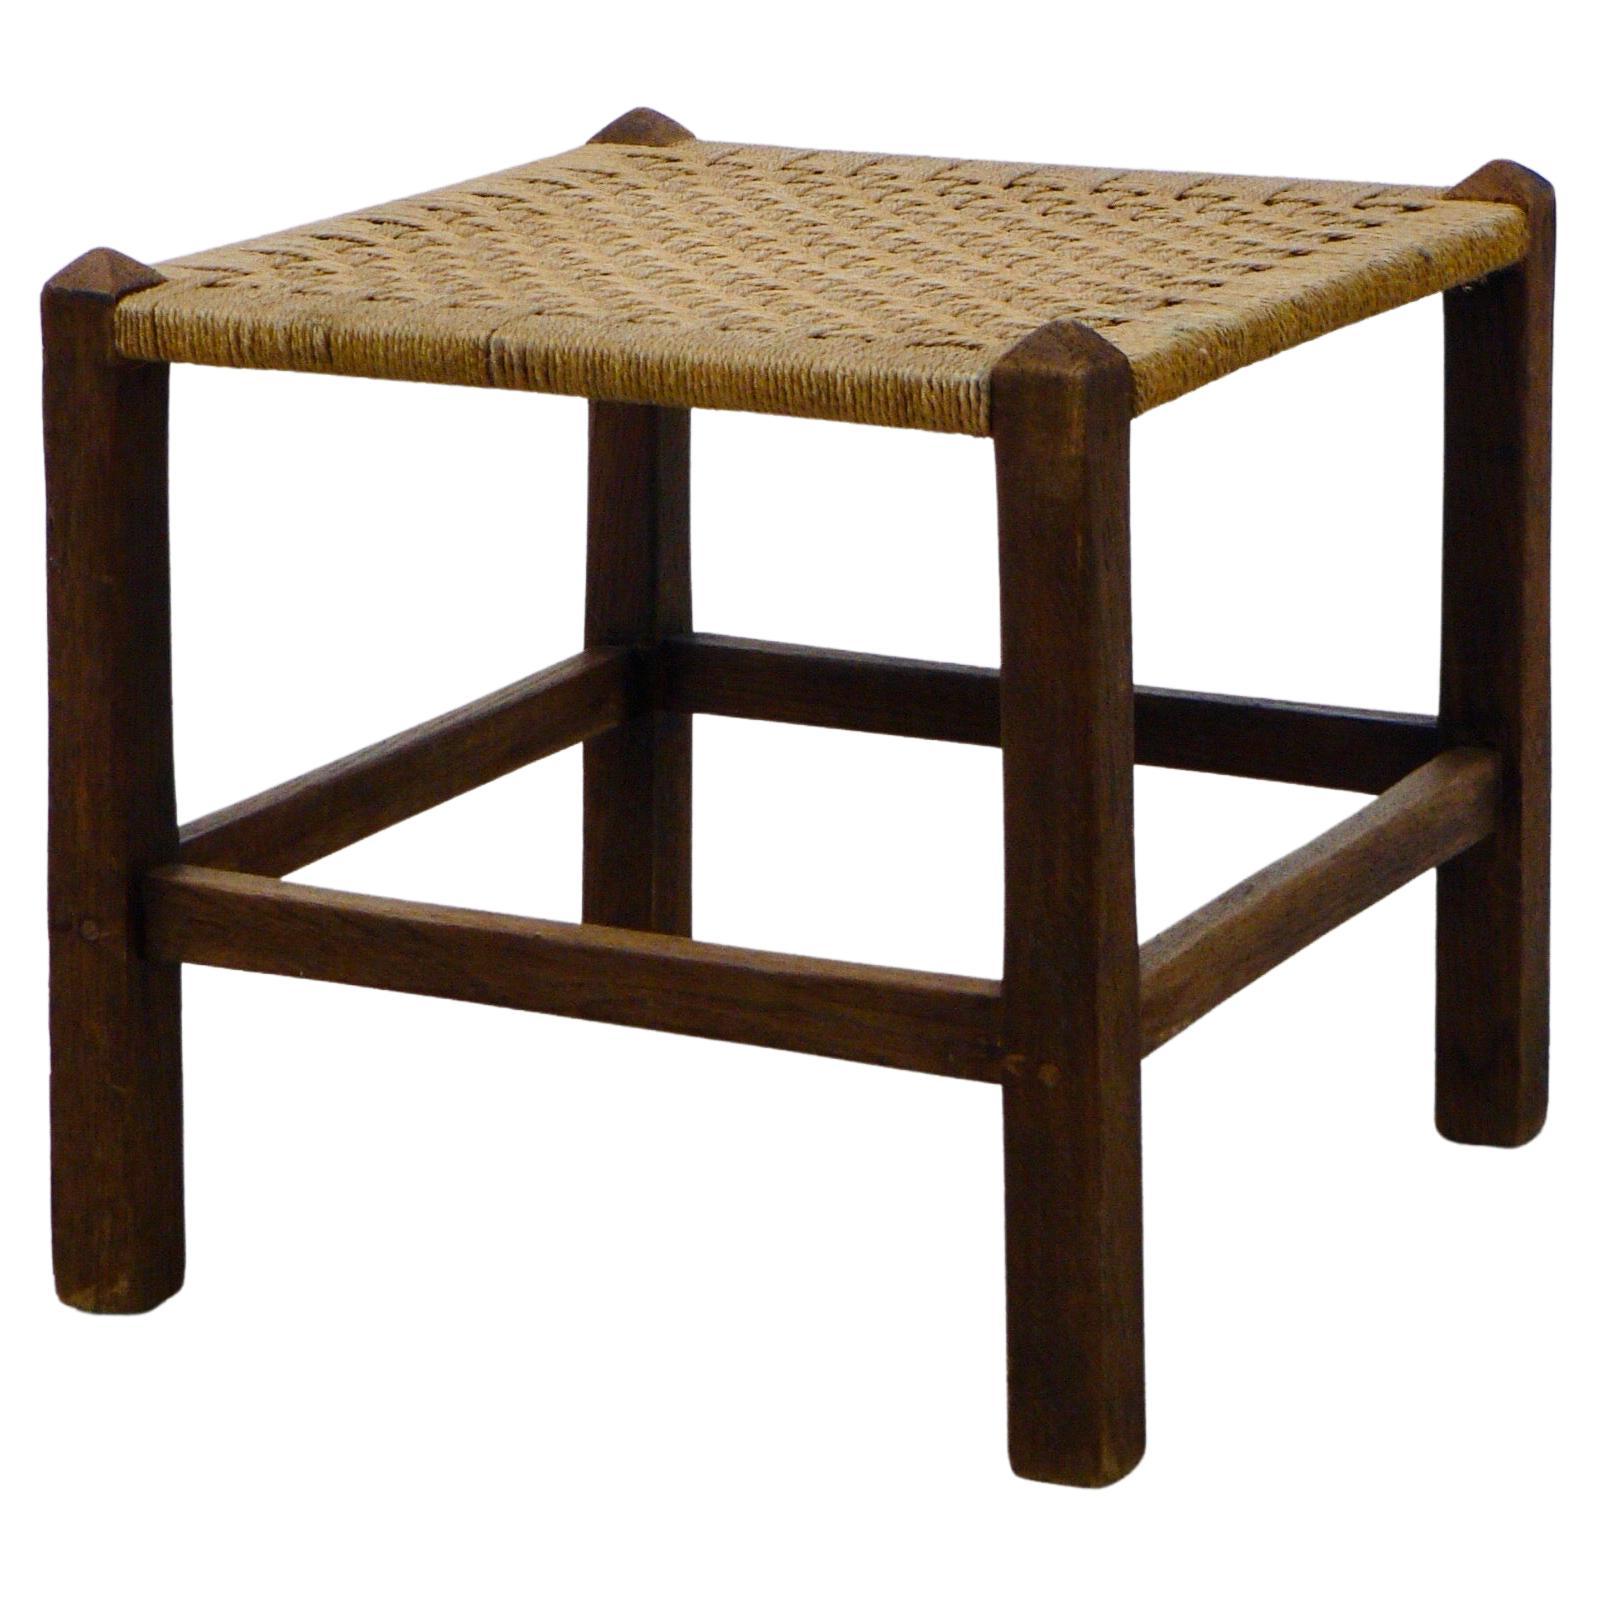 A danish stool form the mid century.